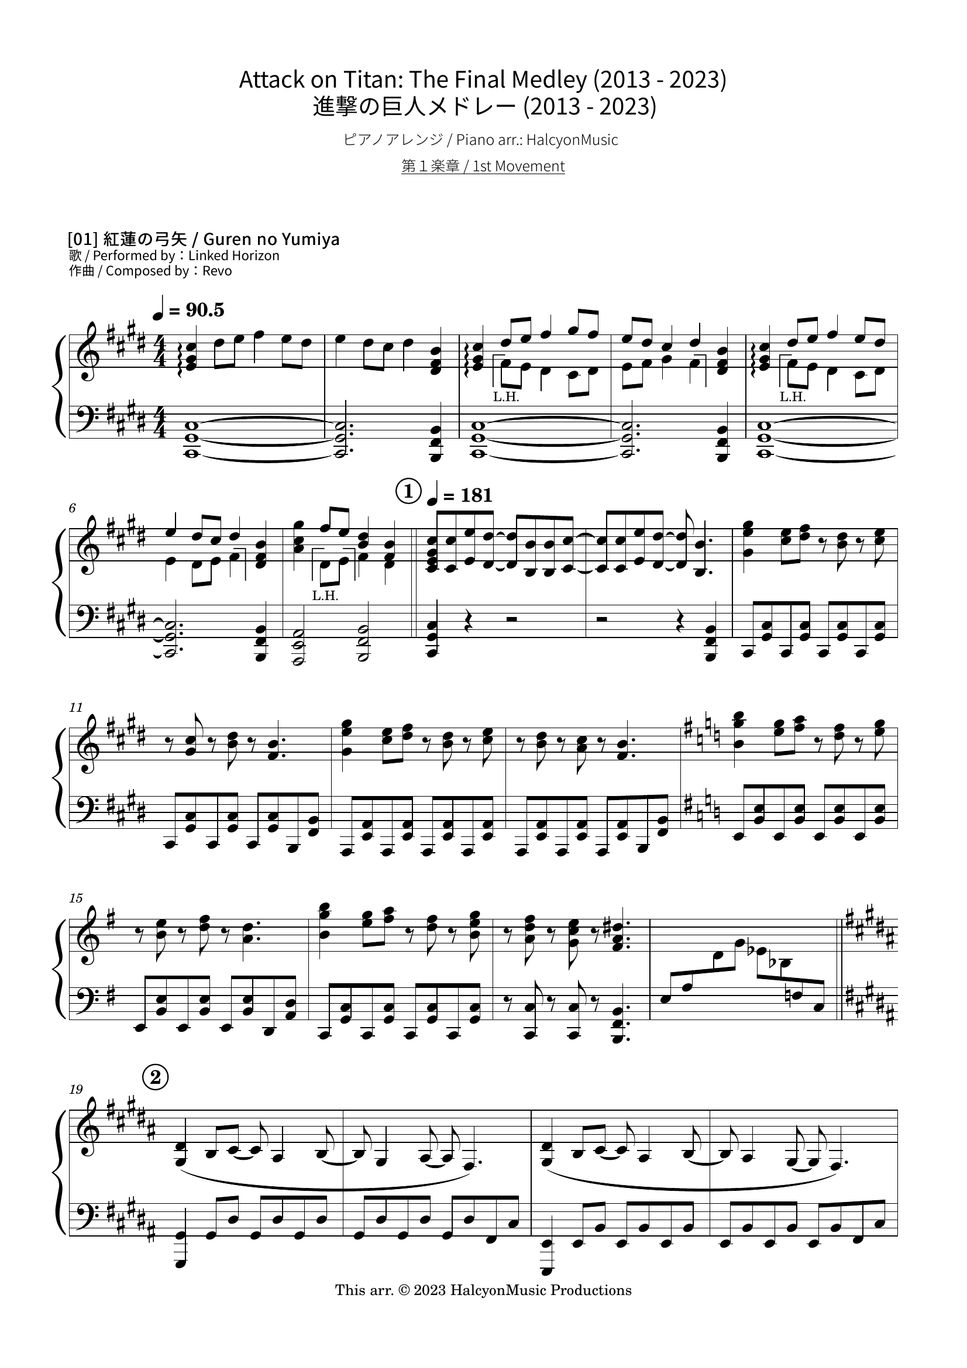 Linked Horizon・澤野弘之 - 進撃の巨人ピアノメドレー（2013 - 2023）(1 / 3) by HalcyonMusic